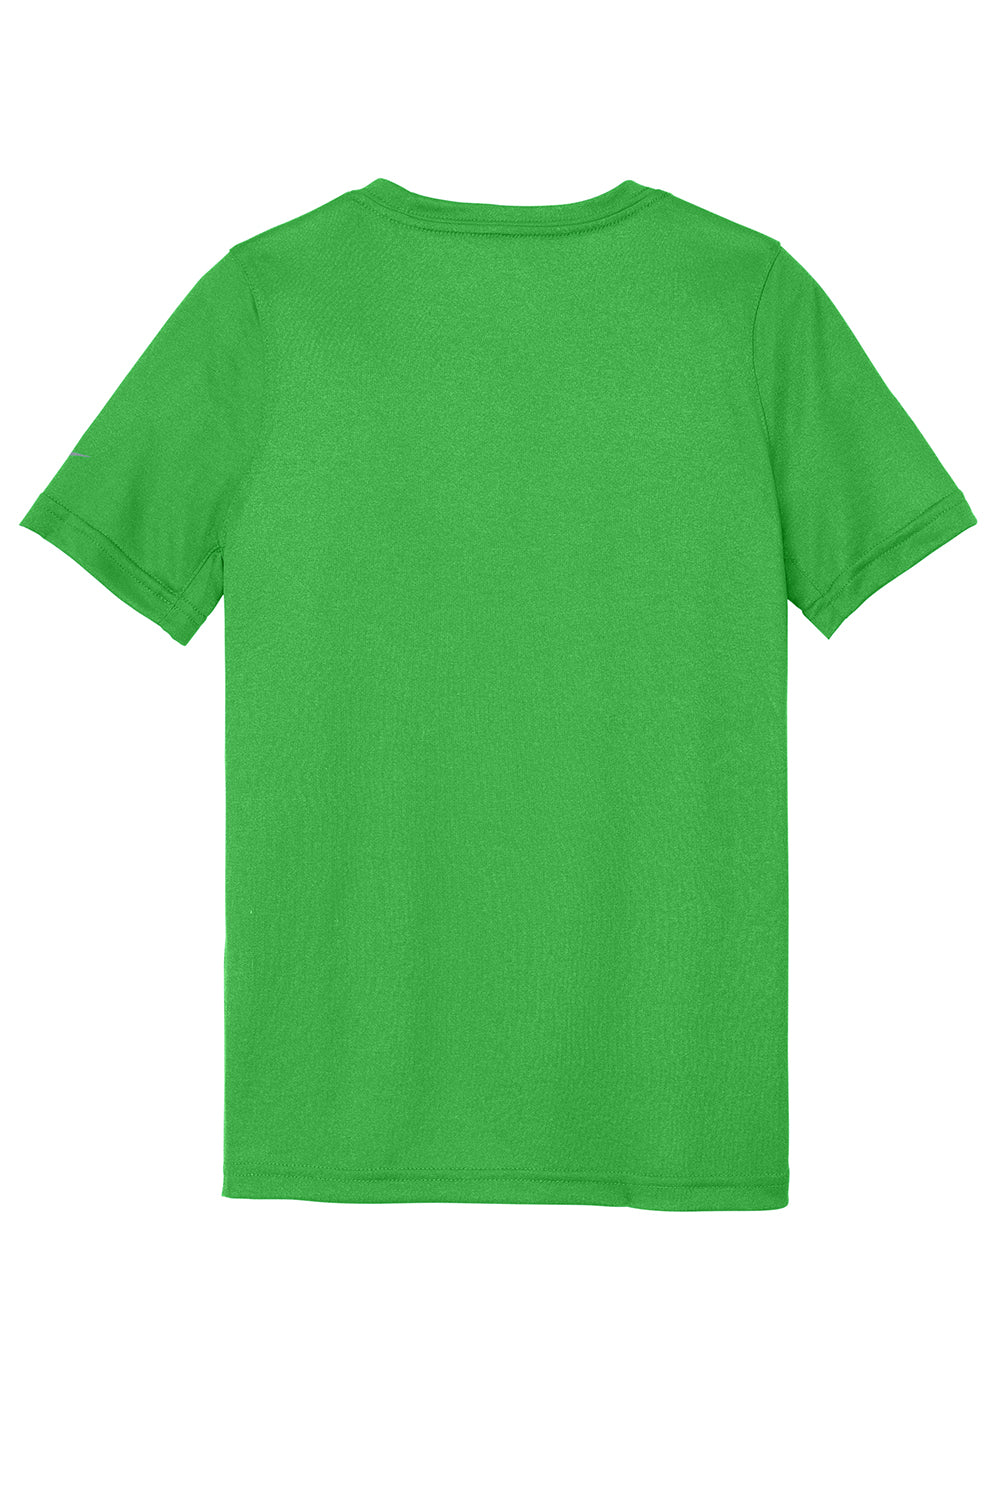 Nike NKDX8787 Youth rLegend Dri-Fit Moisture Wicking Short Sleeve Crewneck T-Shirt Apple Green Flat Back